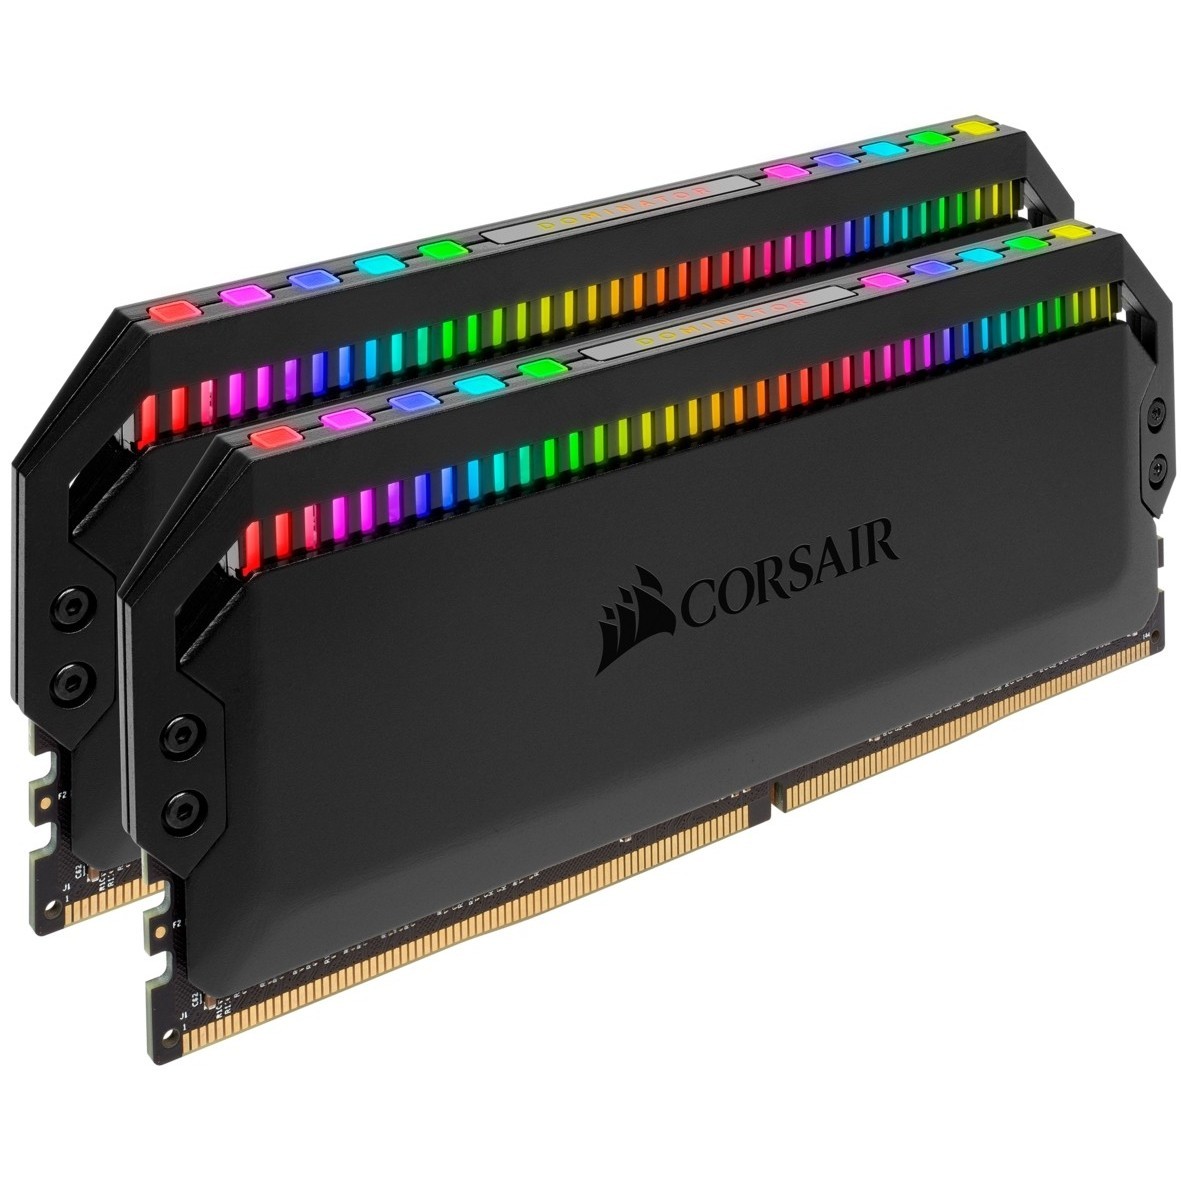 Оперативная память Corsair Dominator Platinum RGB DDR4 (CMT16GX4M2C3200C16)